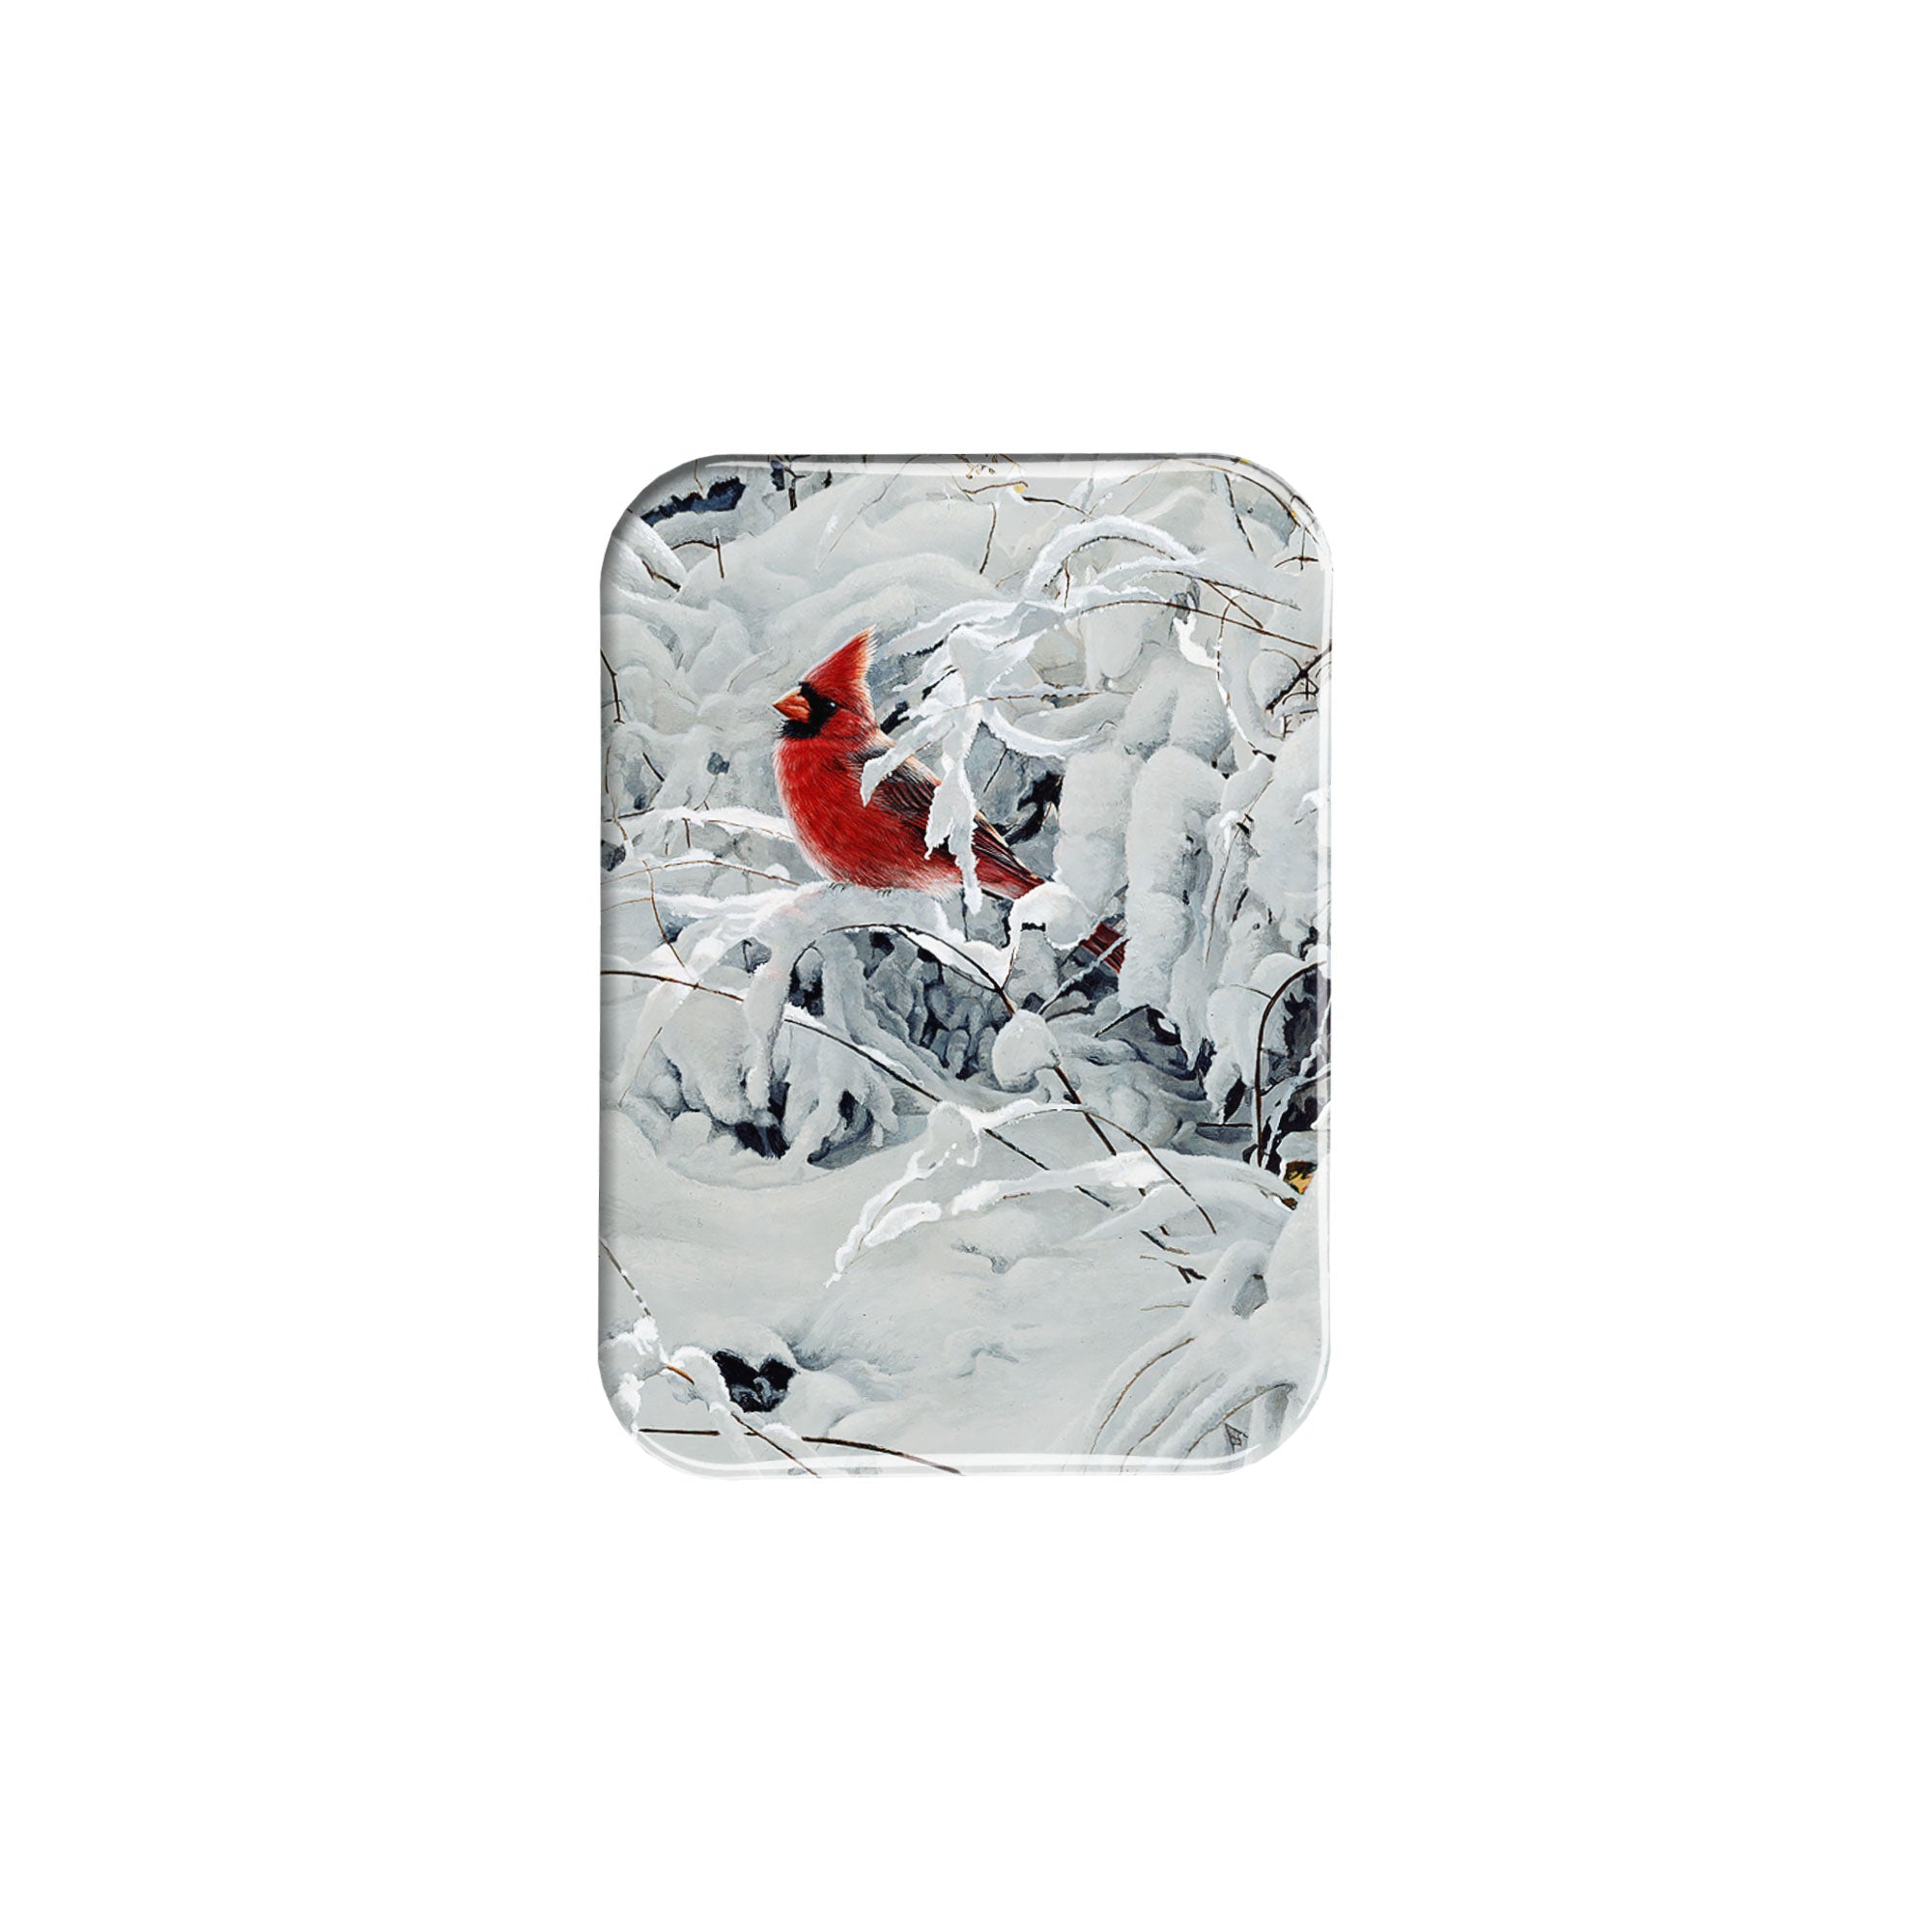 "Winter Red" - 2.5" X 3.5" Rectangle Fridge Magnets